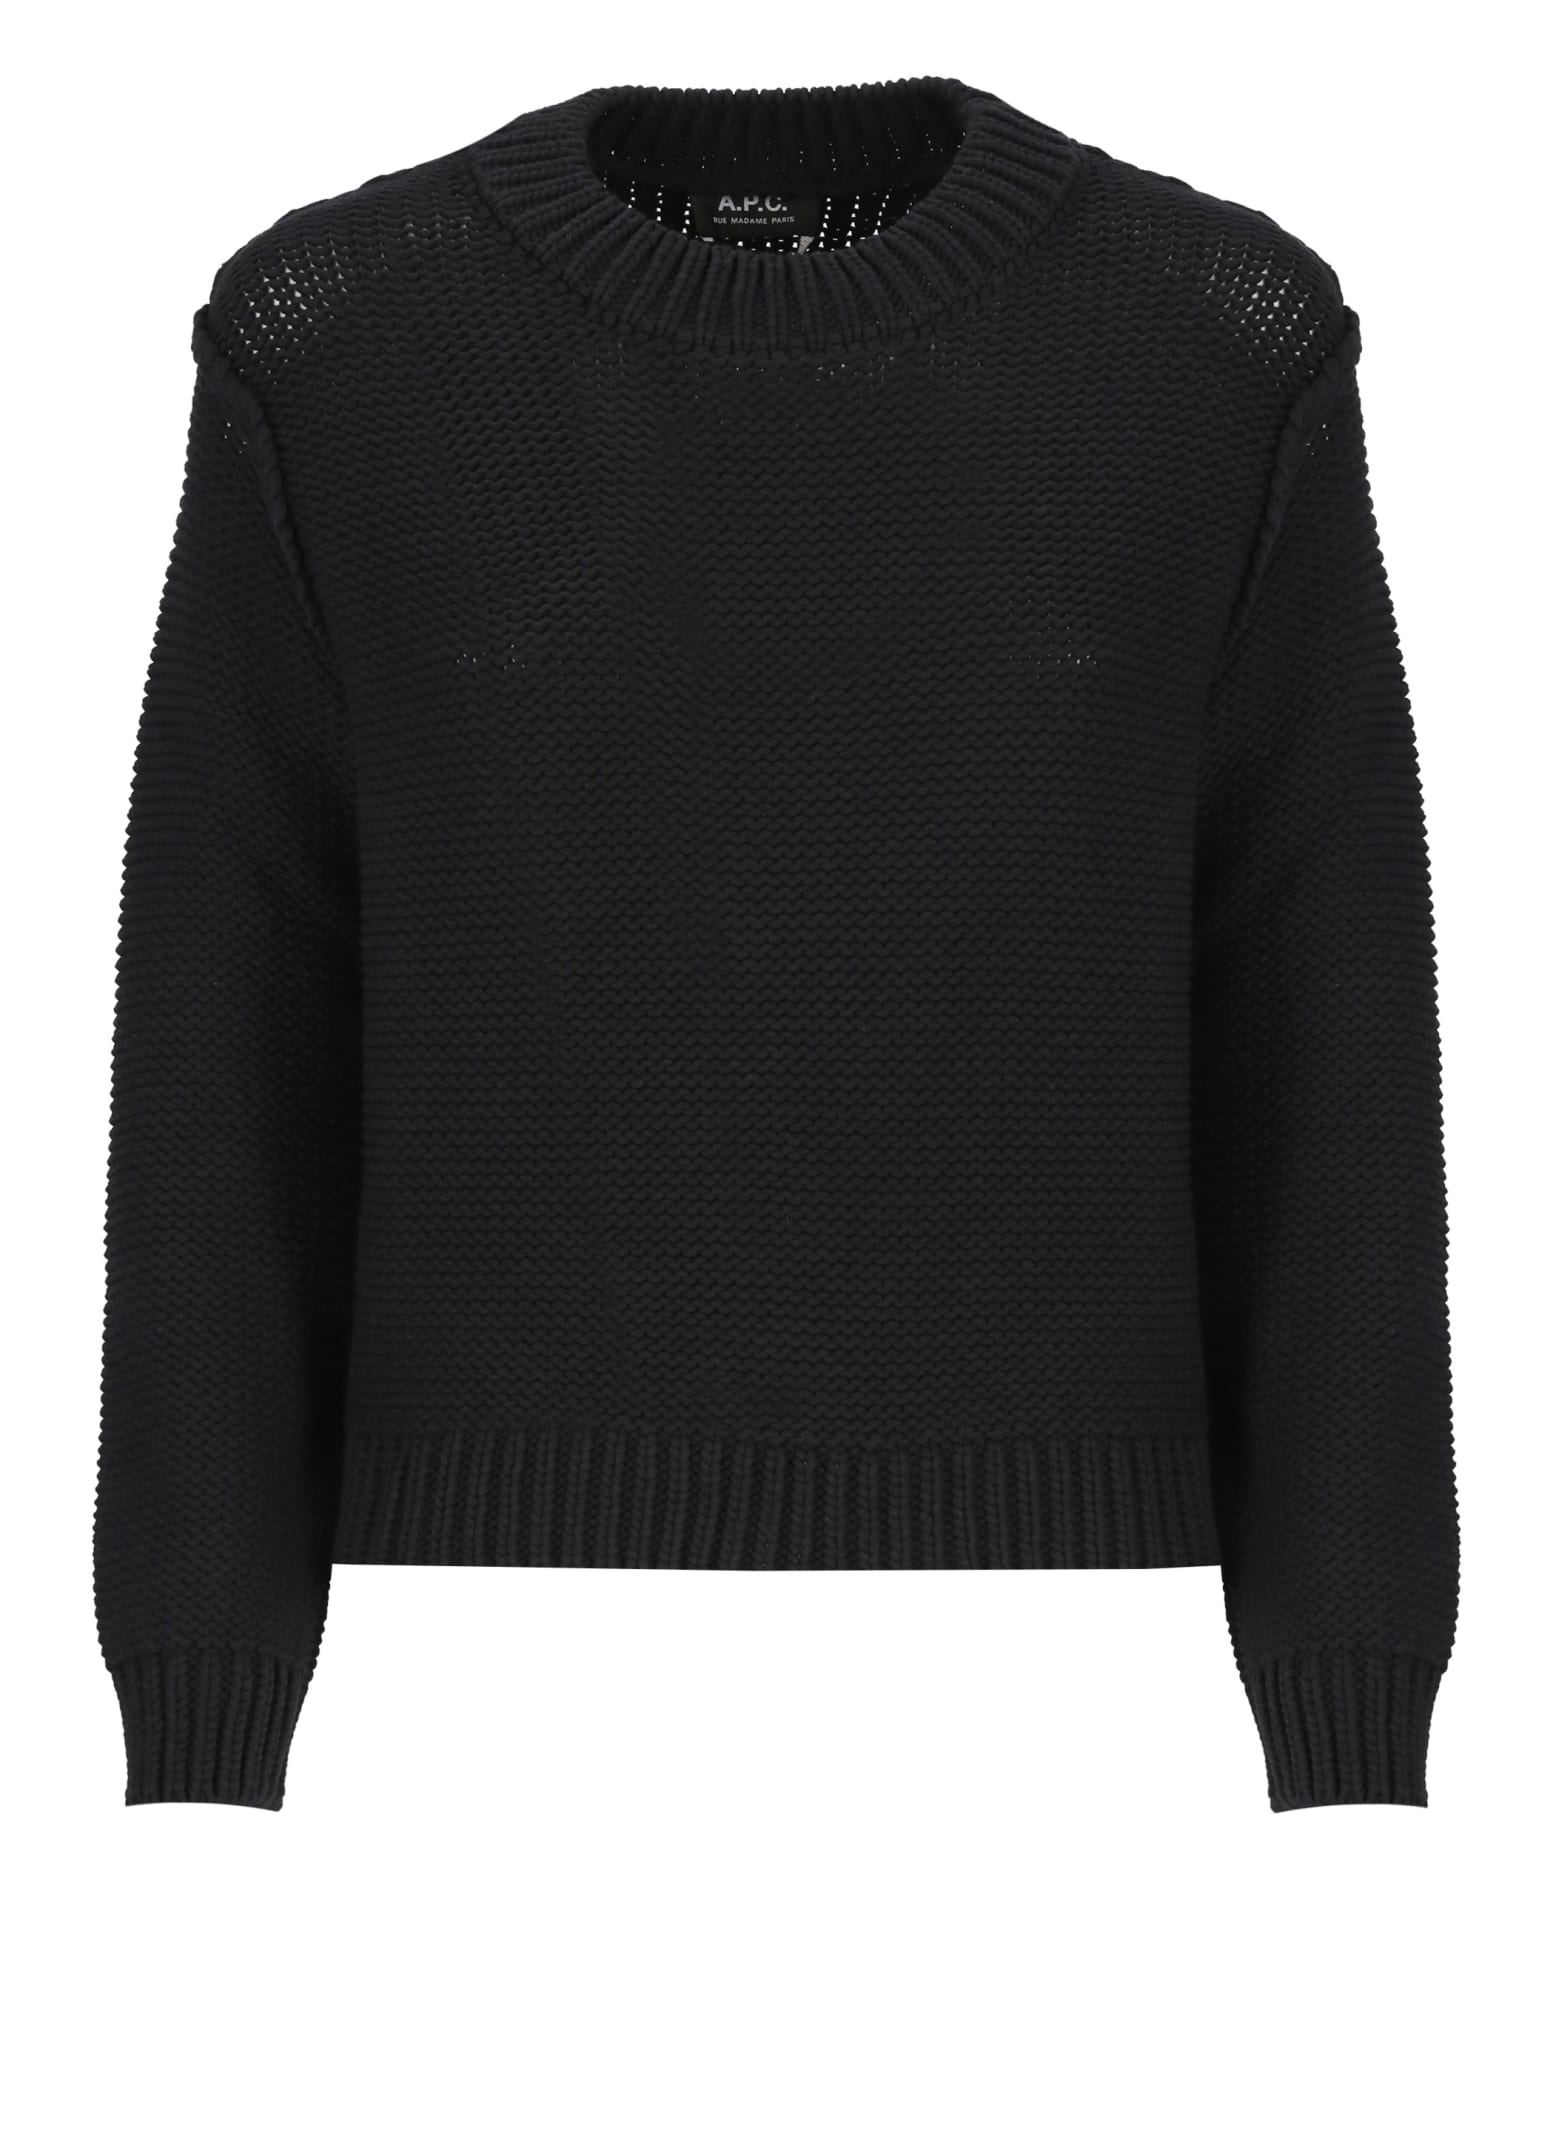 A. P.C. Inga Sweater